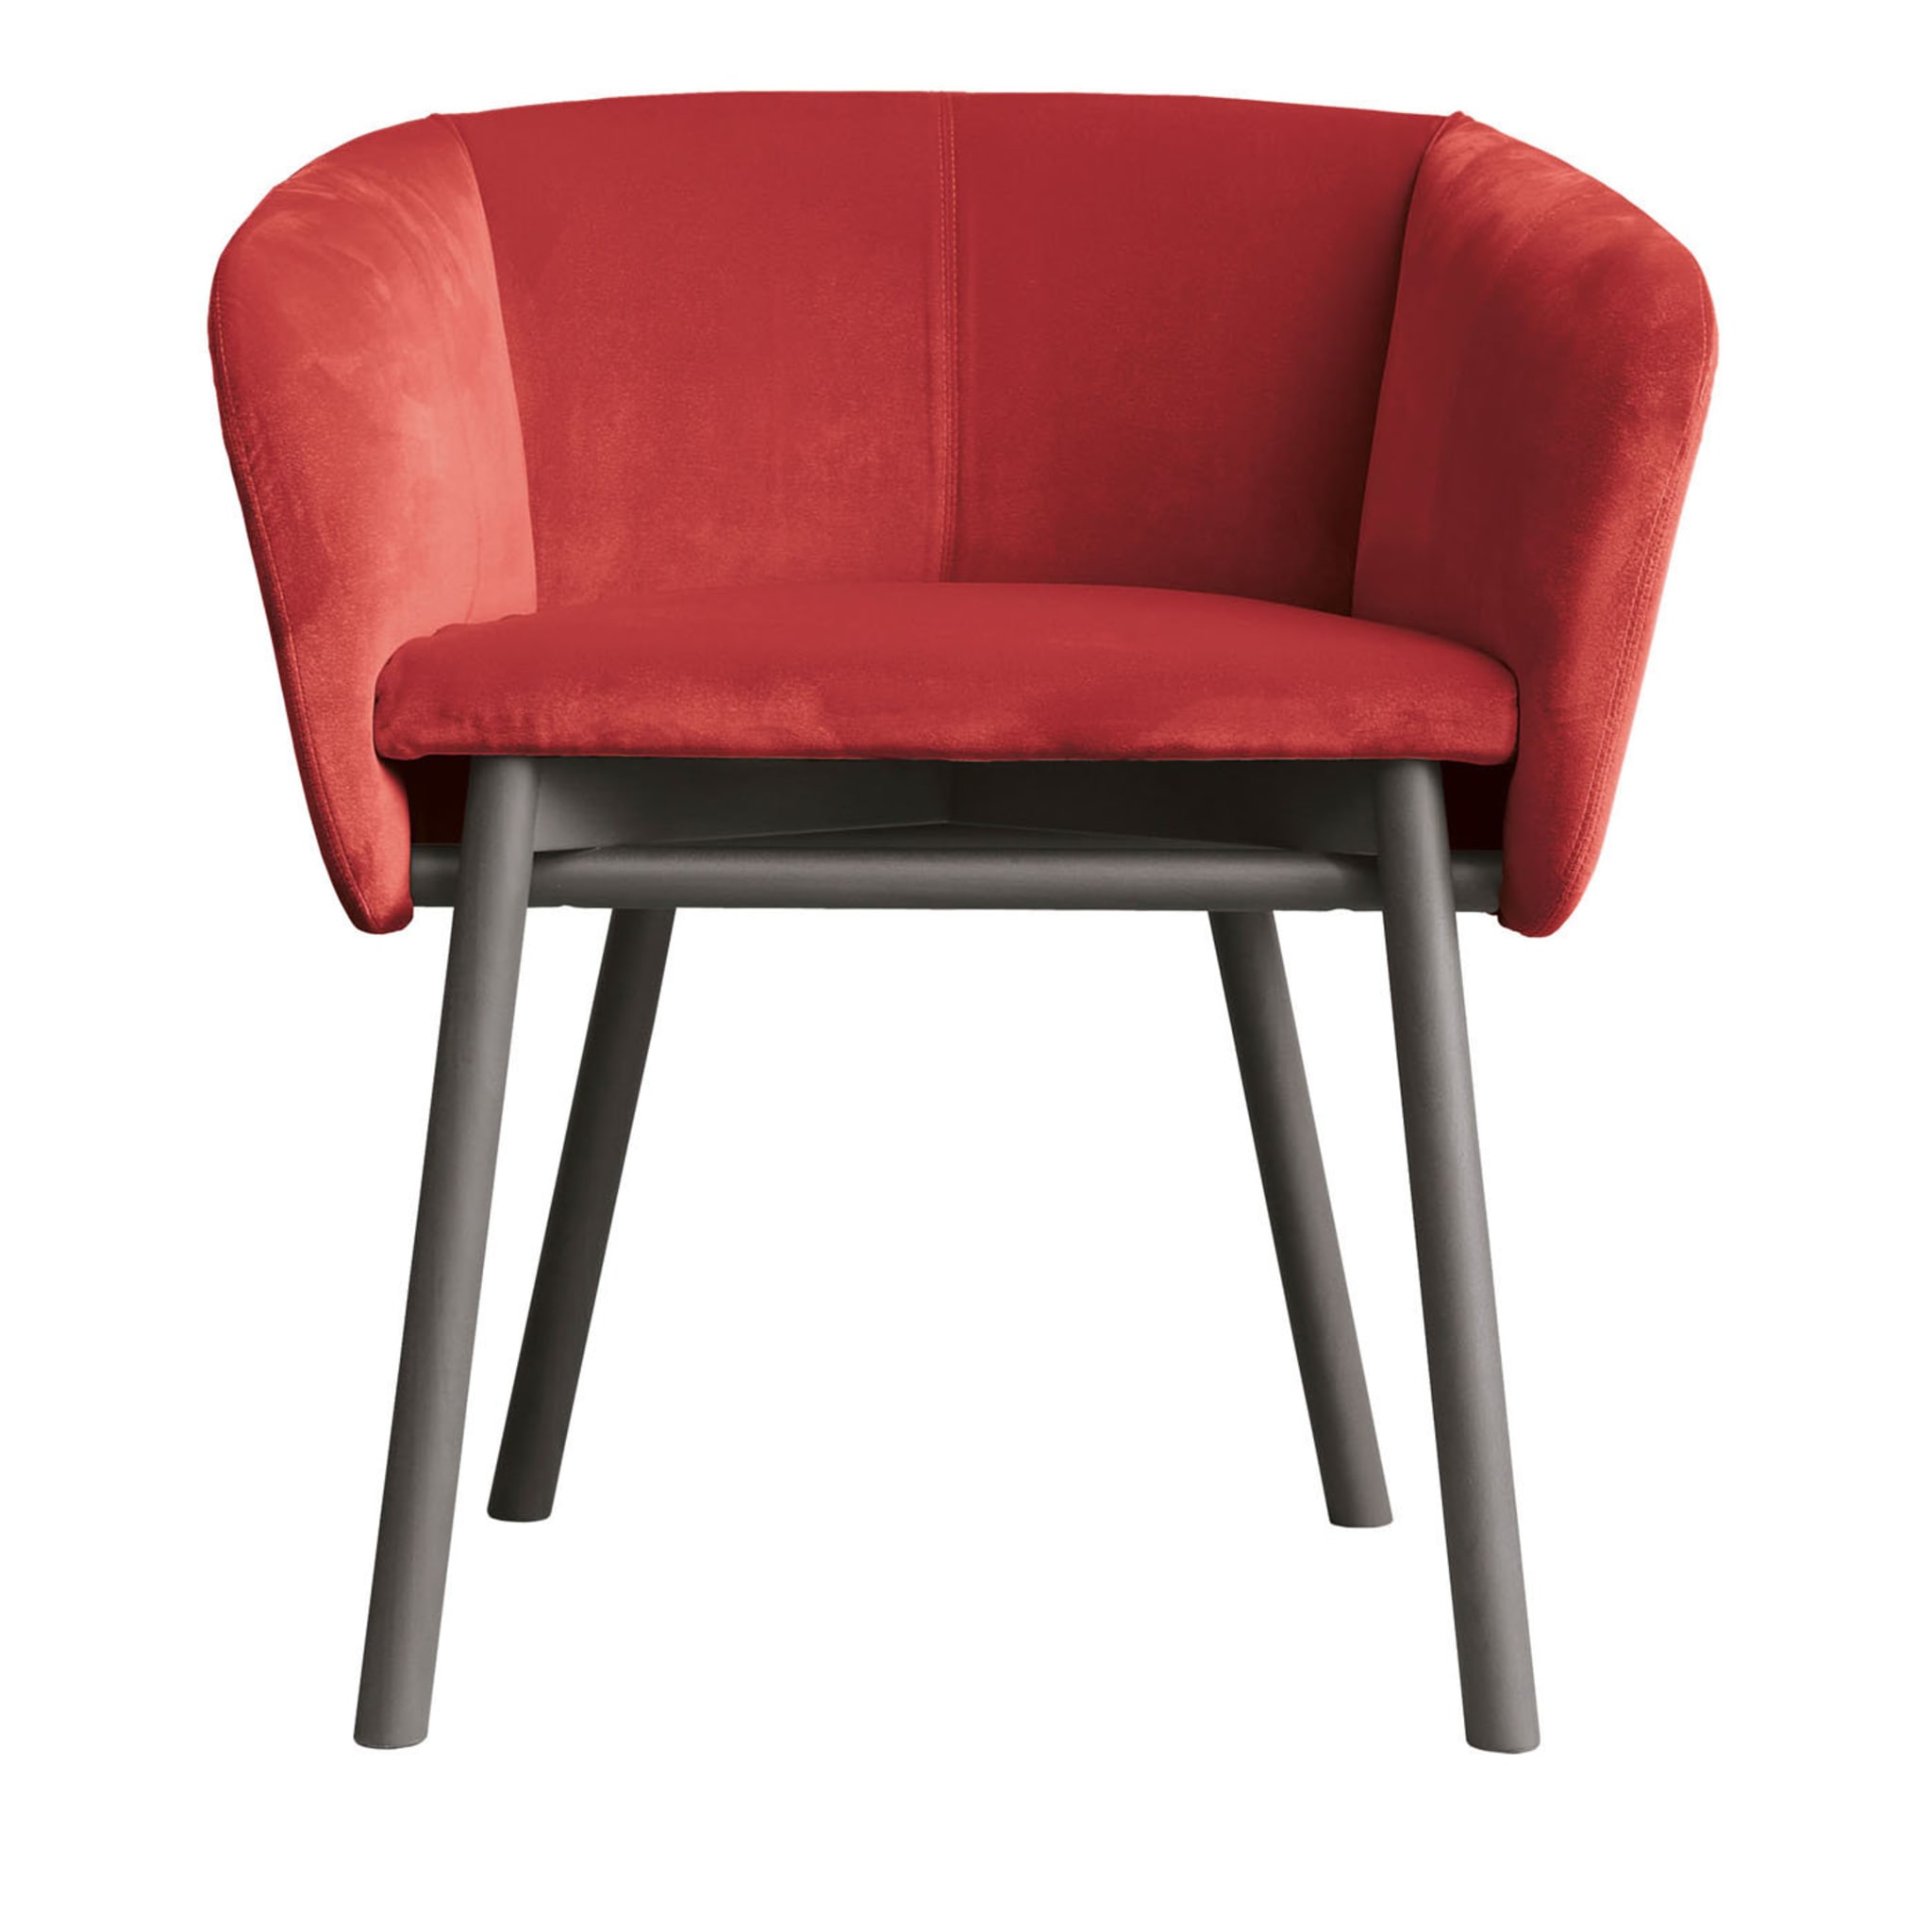 Chaise rouge Balù d'Emilio Nanni - Vue principale